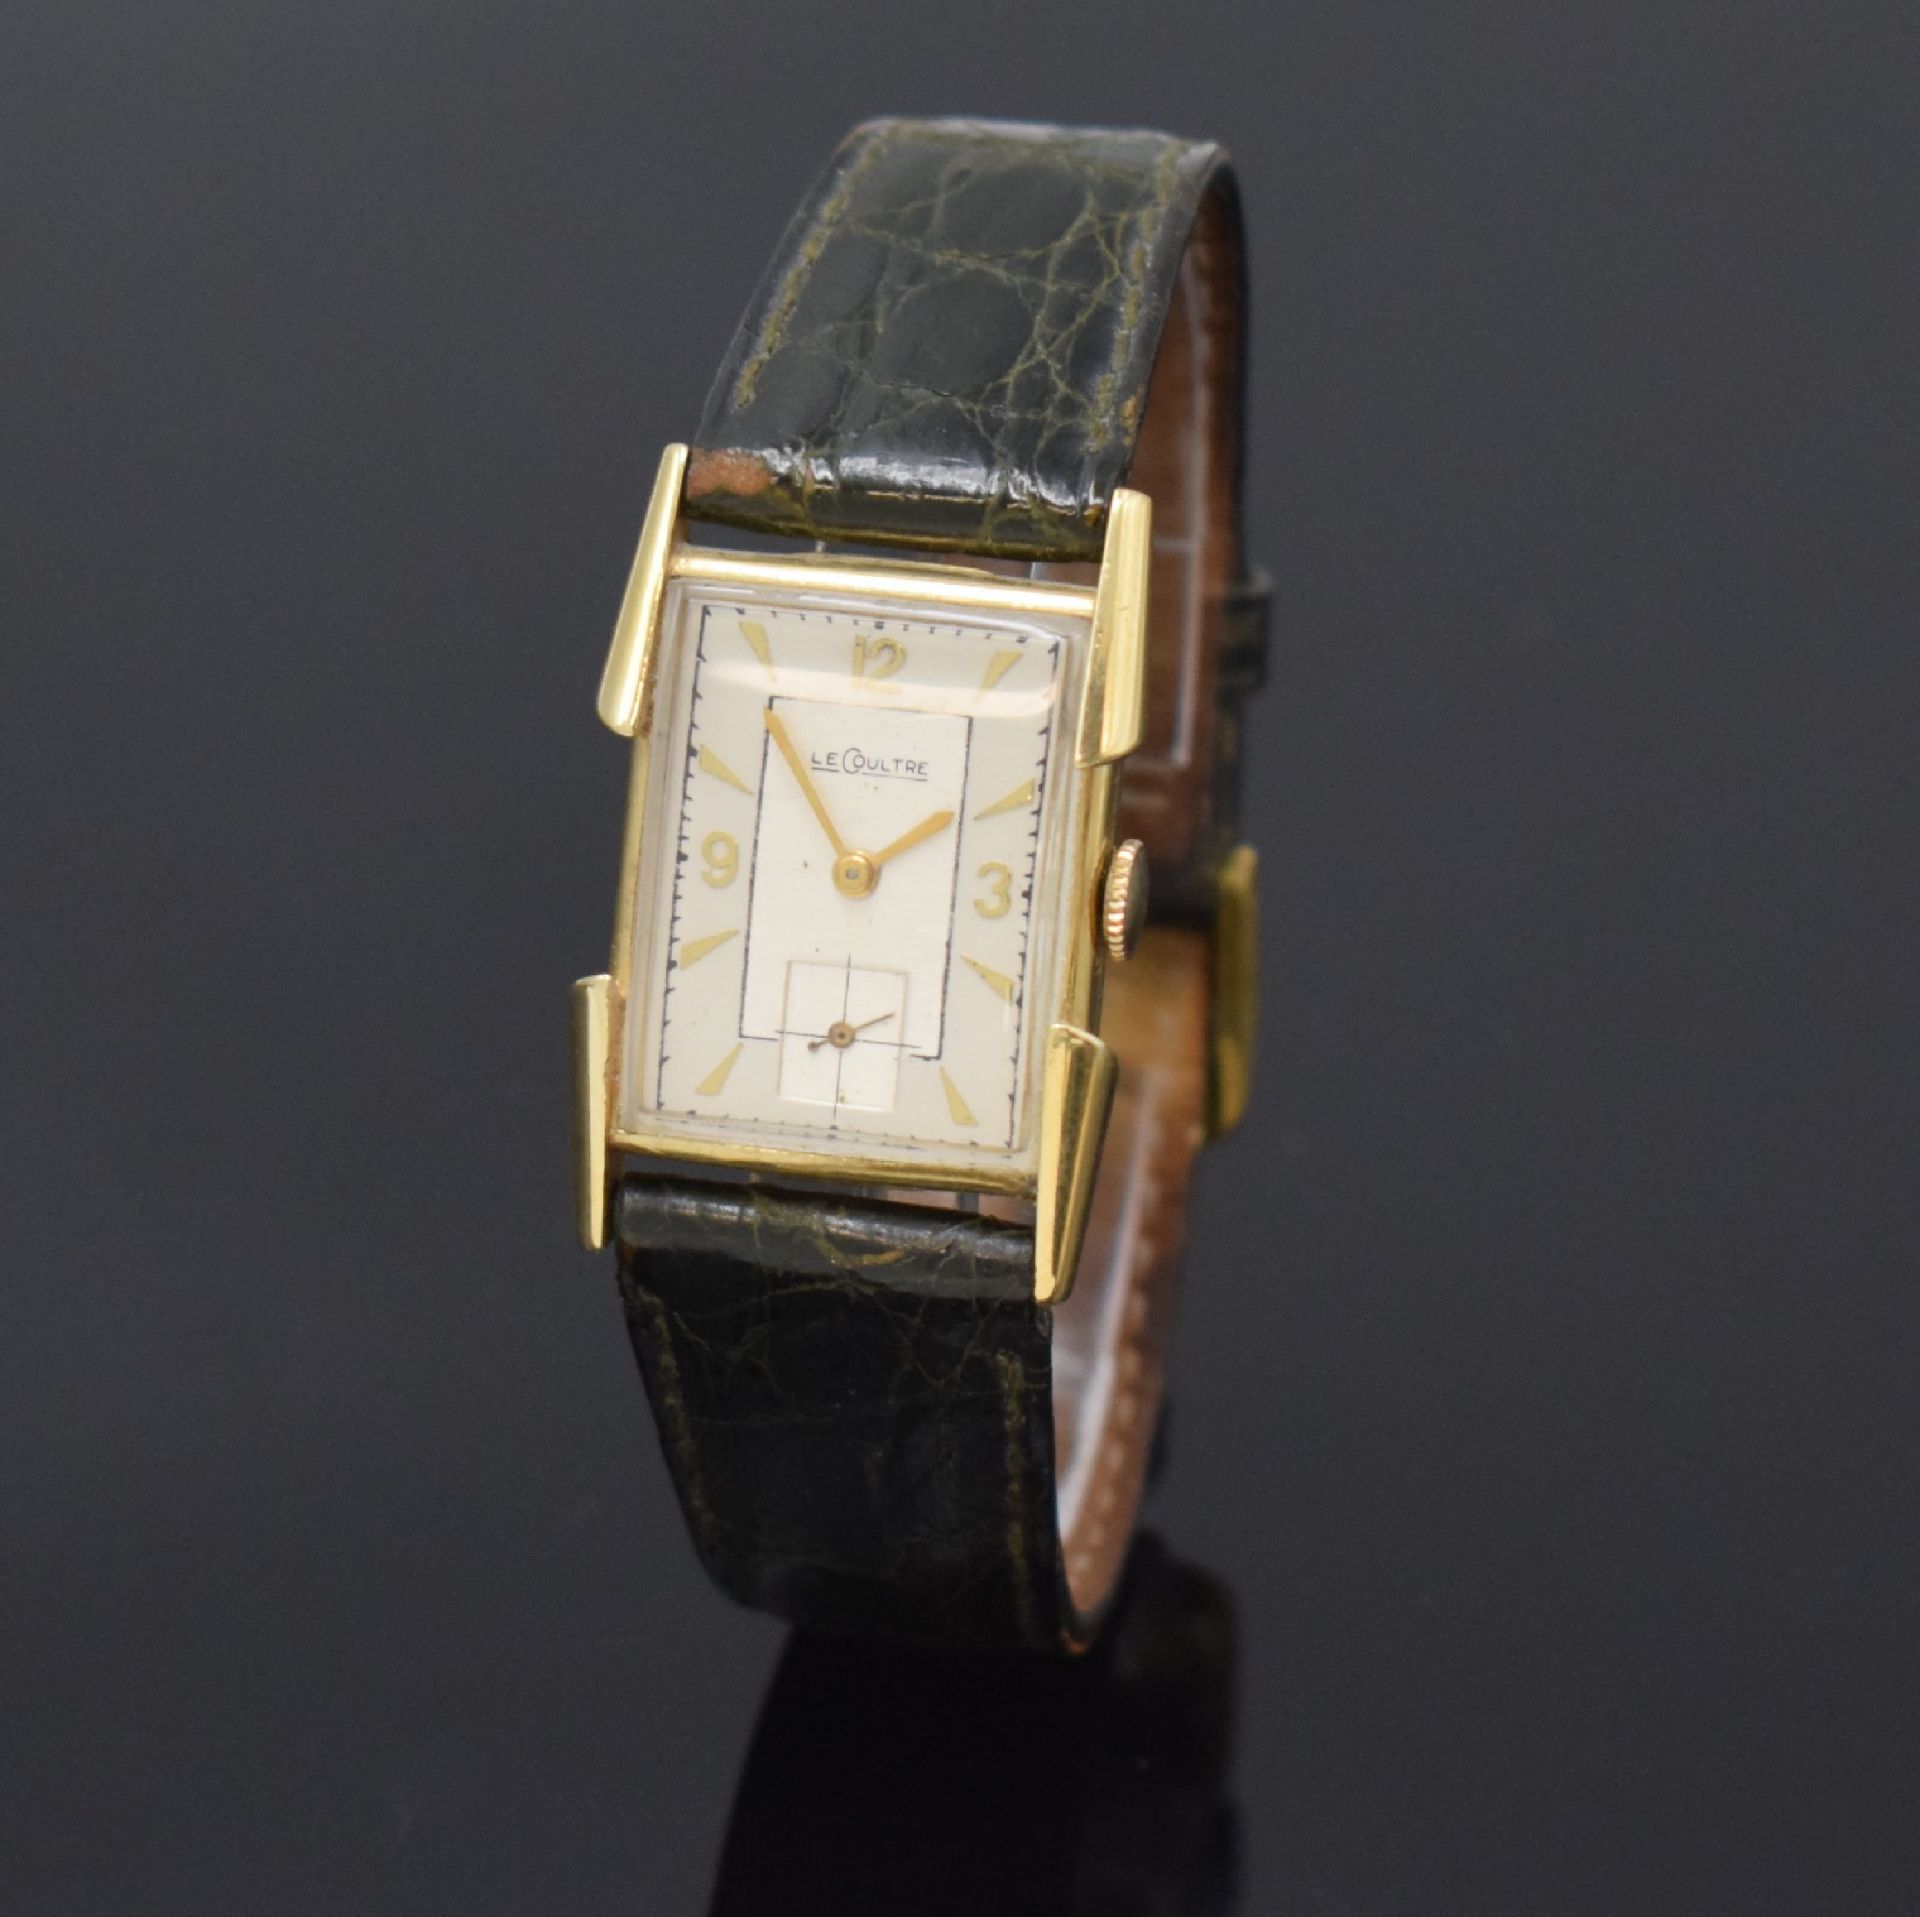 LeCoultre Armbanduhr in GG 585/000, Schweiz/USA Ende